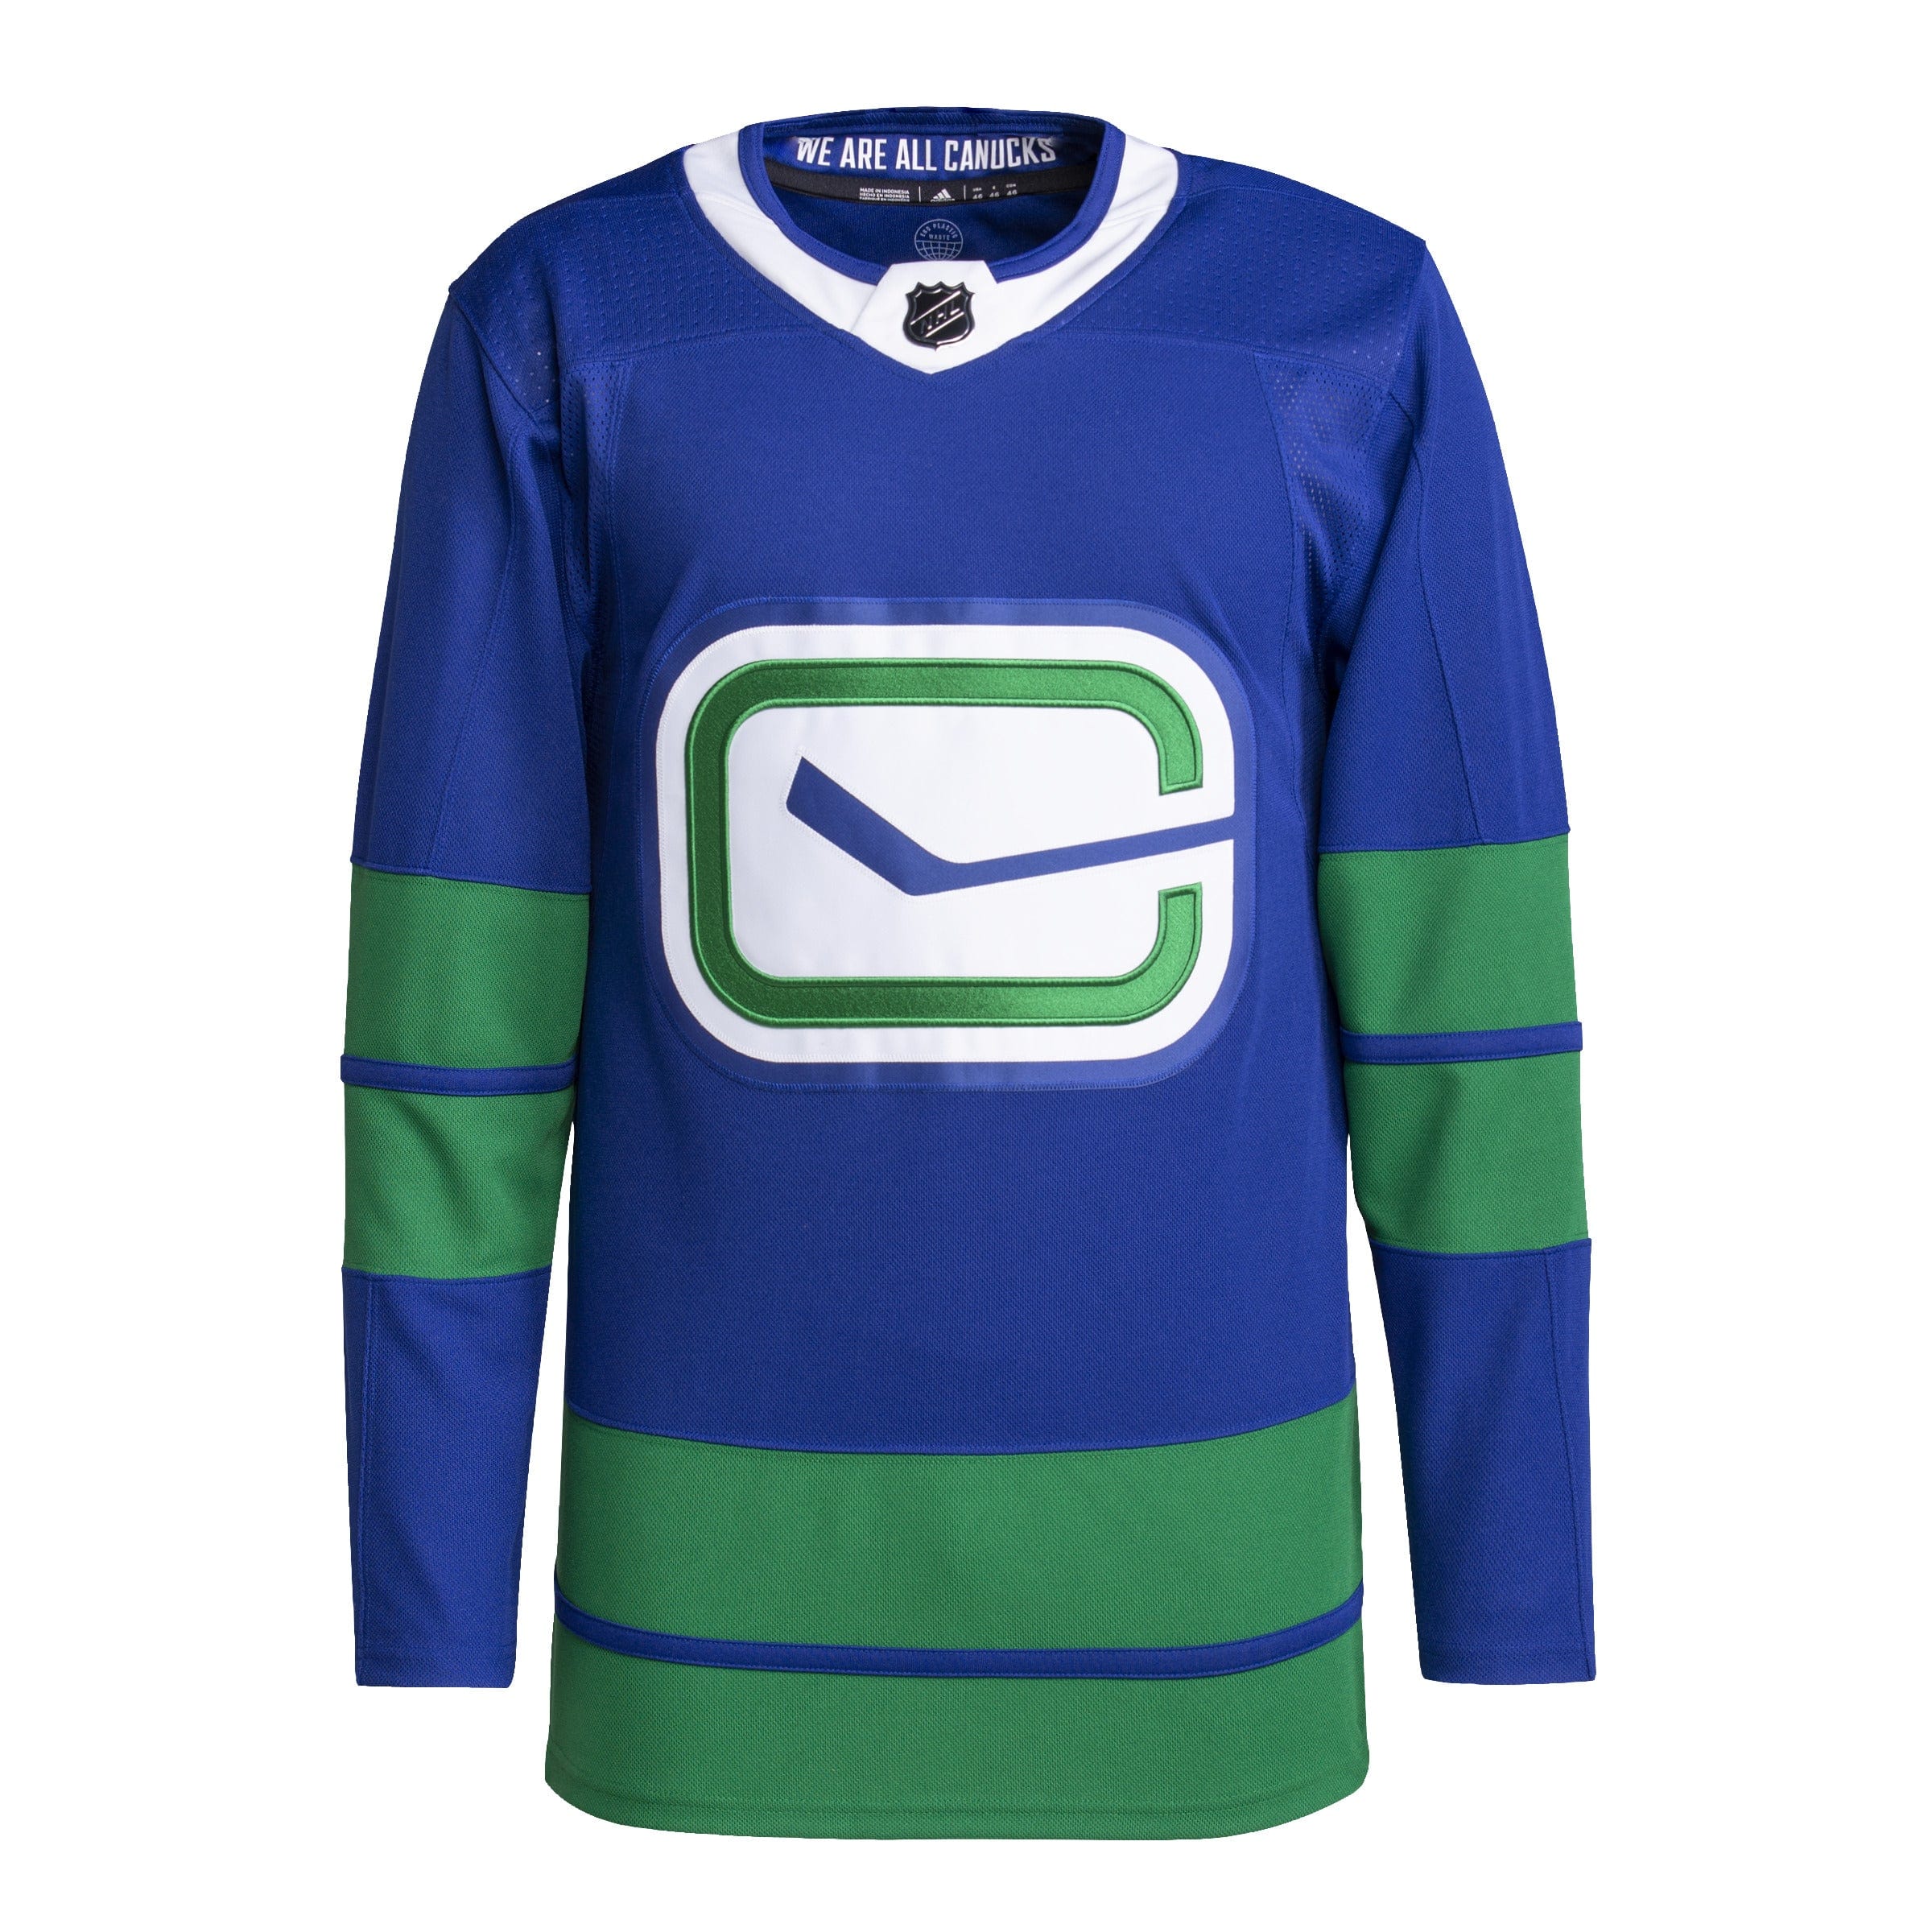 Quinn Hughes Vancouver Canucks Adidas Primegreen Authentic NHL Hockey Jersey - Home / XL/54